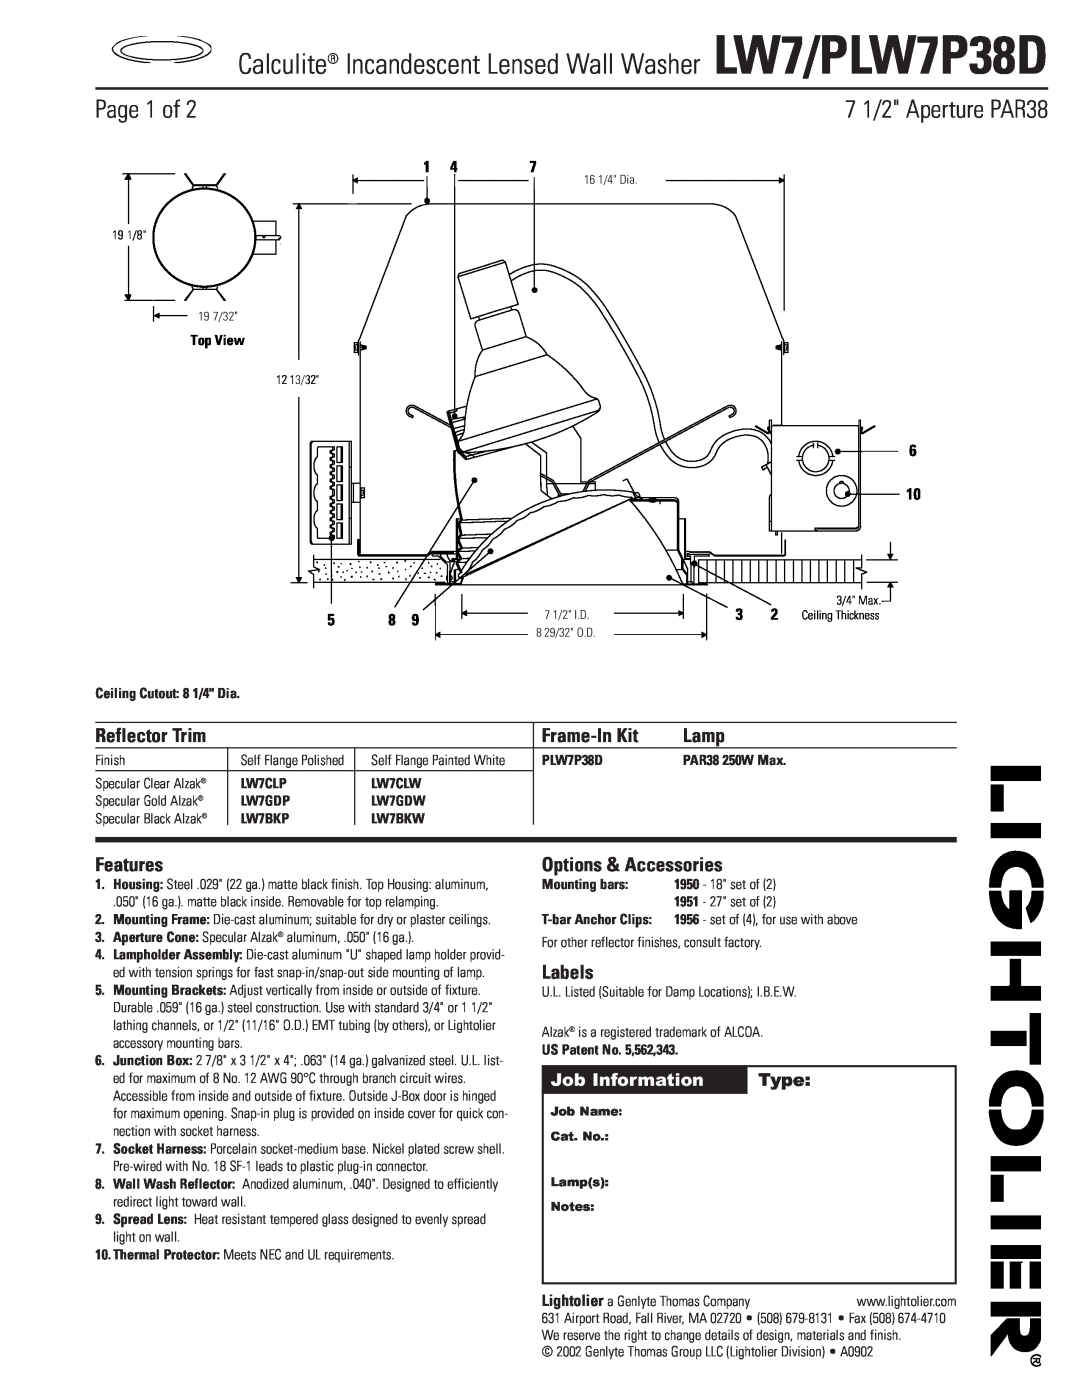 Lightolier LW7/PLW7P38D manual Page 1 of, 7 1/2 Aperture PAR38, Job Information, Type, Frame-InKit, Lamp, Features, Labels 